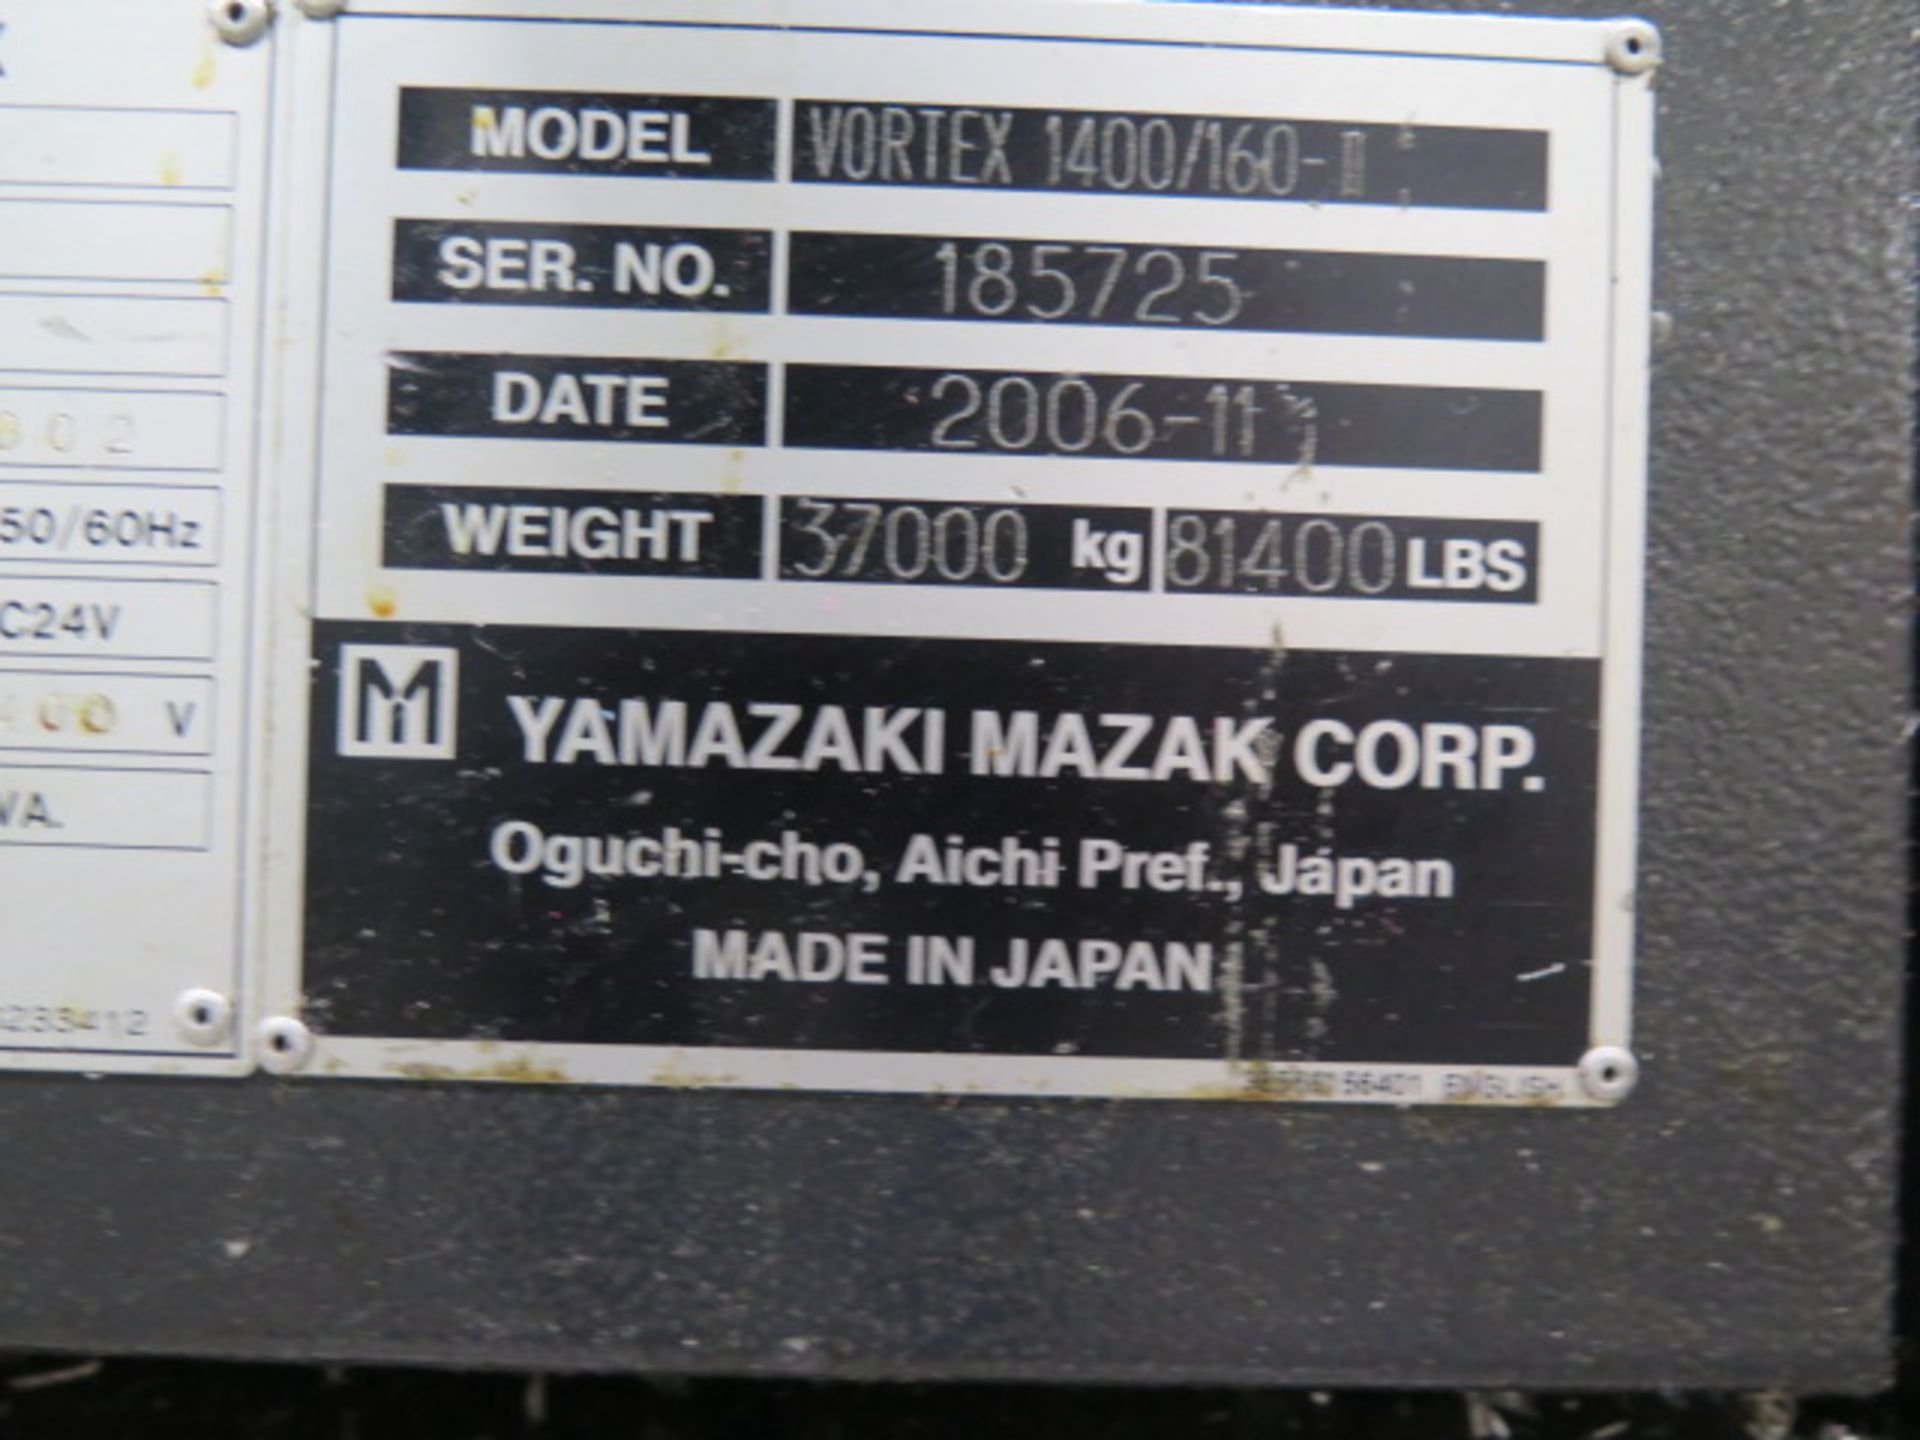 2006 Mazak VORTEX 1400/160-II 5-Axis CNC BRIGE TYPE VMC s/n 185725 SOLD AS IS - Image 20 of 20